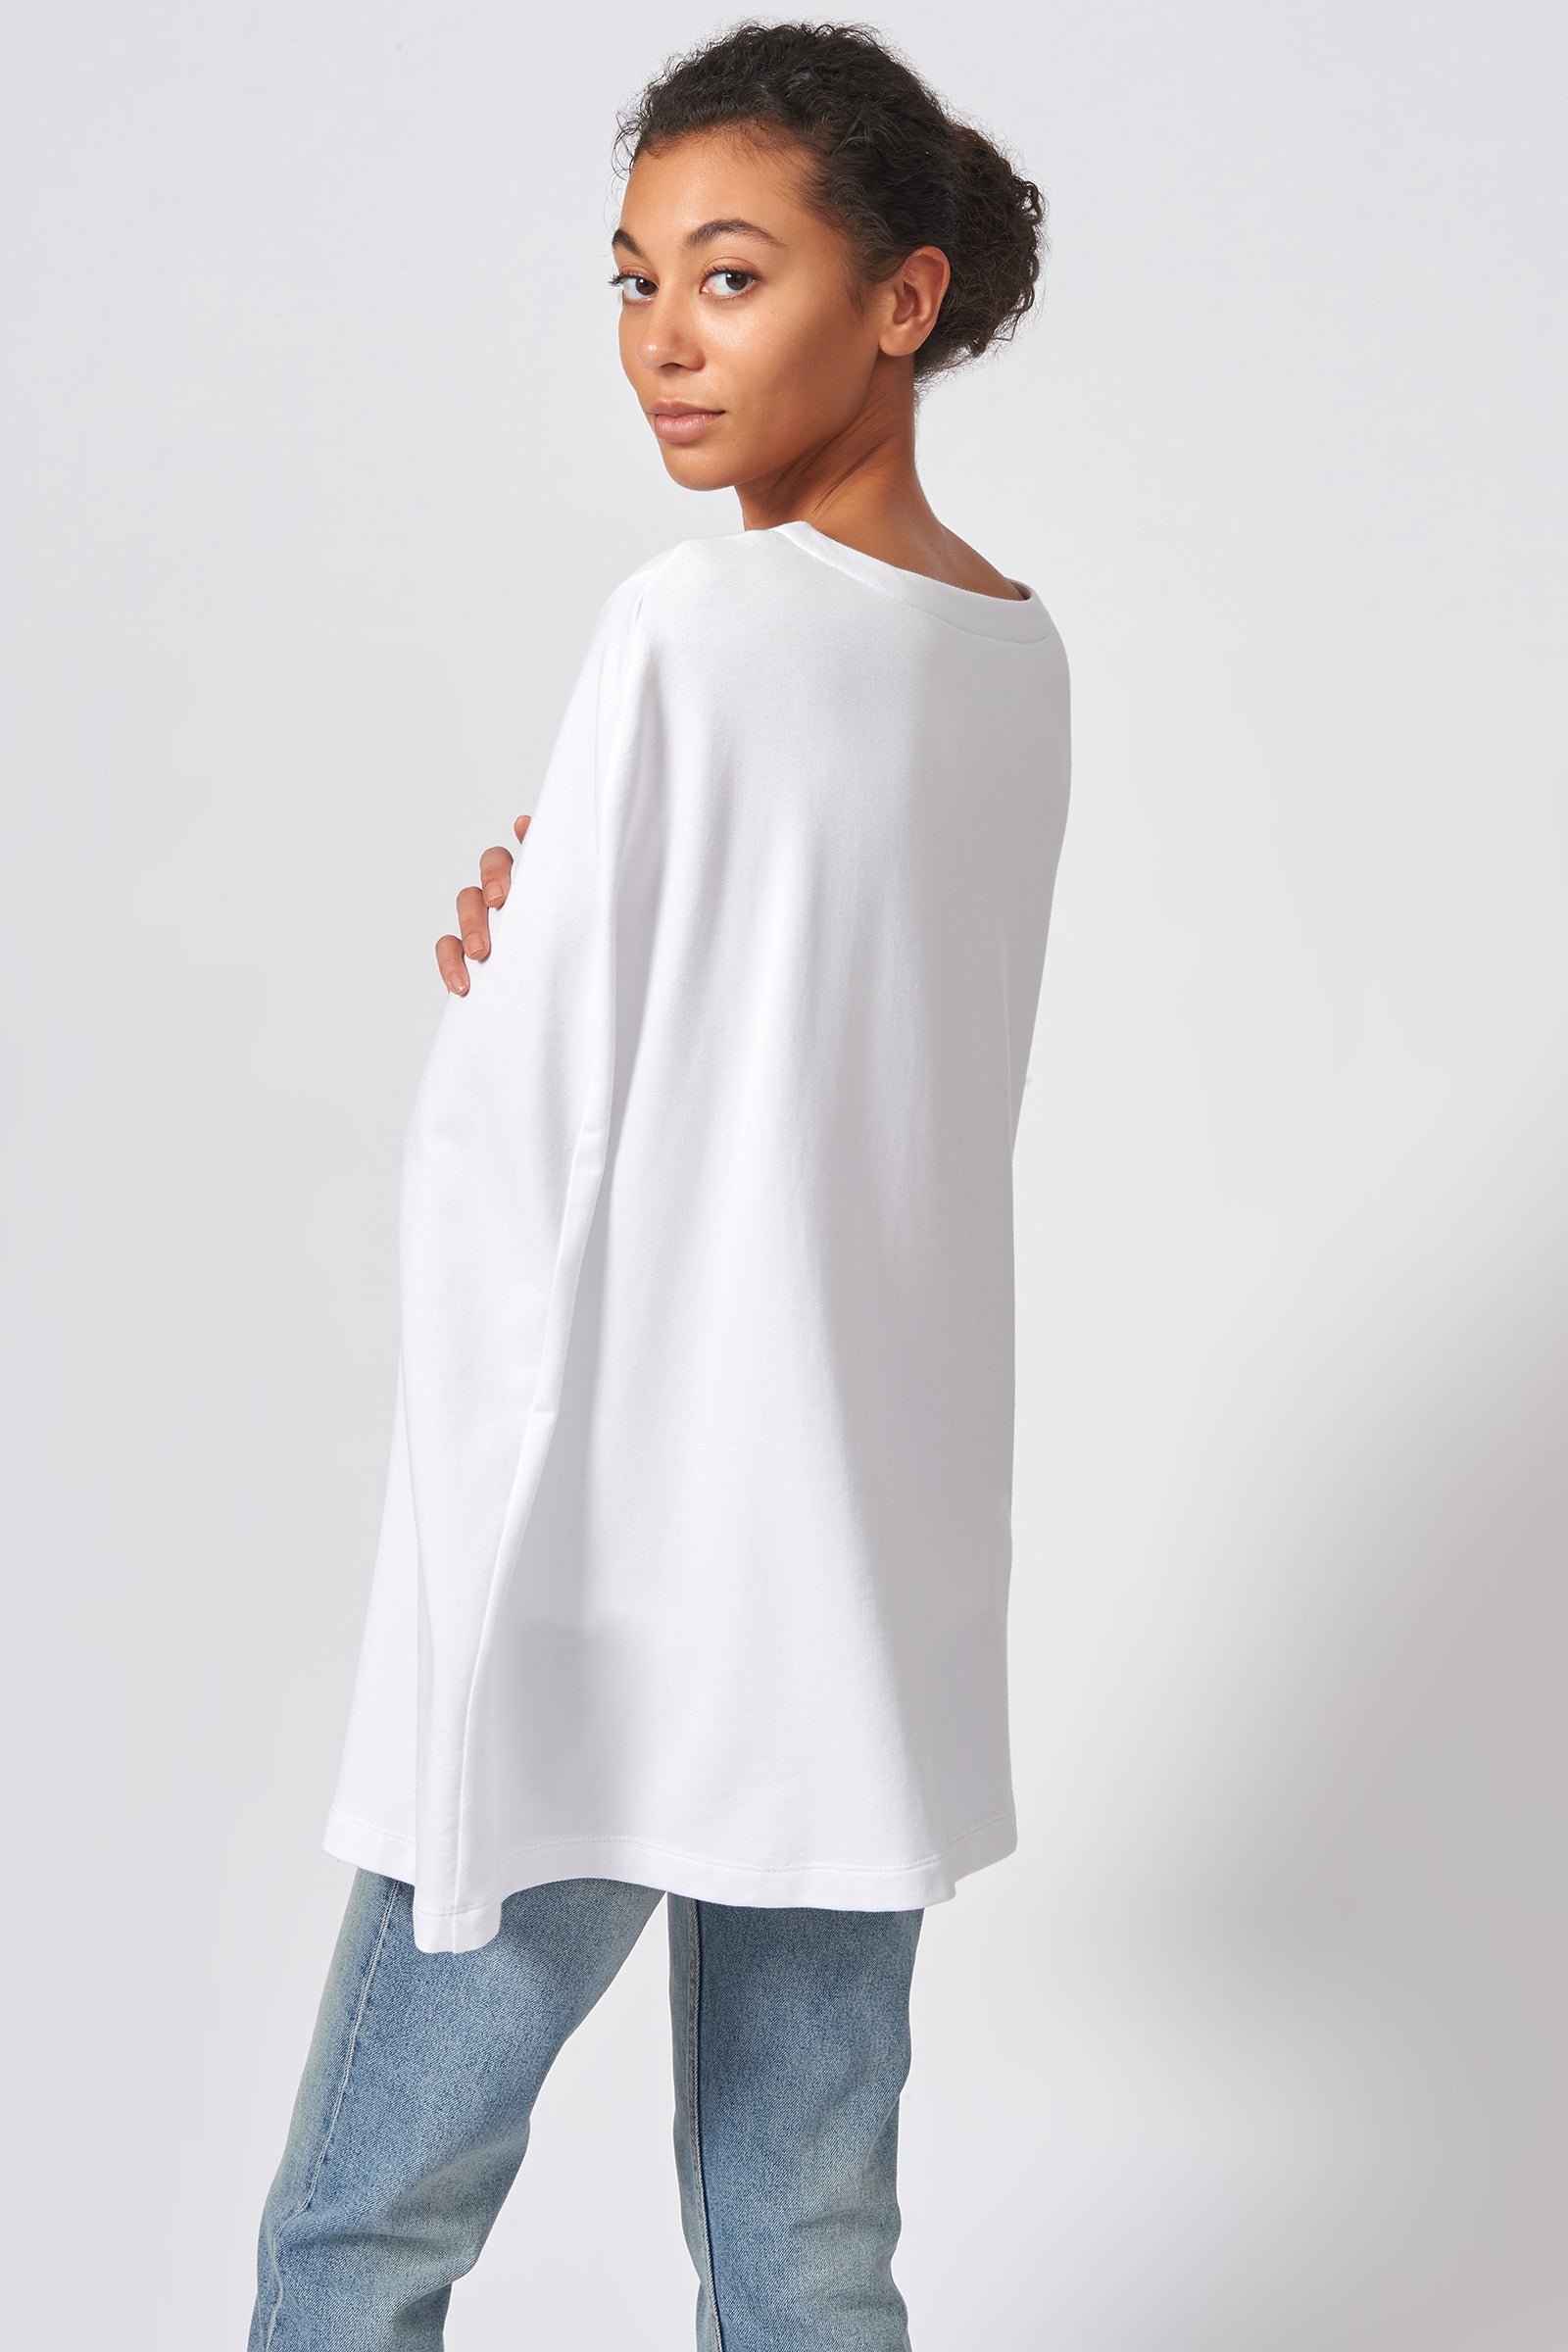 Kal Rieman Cape Sweatshirt in White on Model Front View